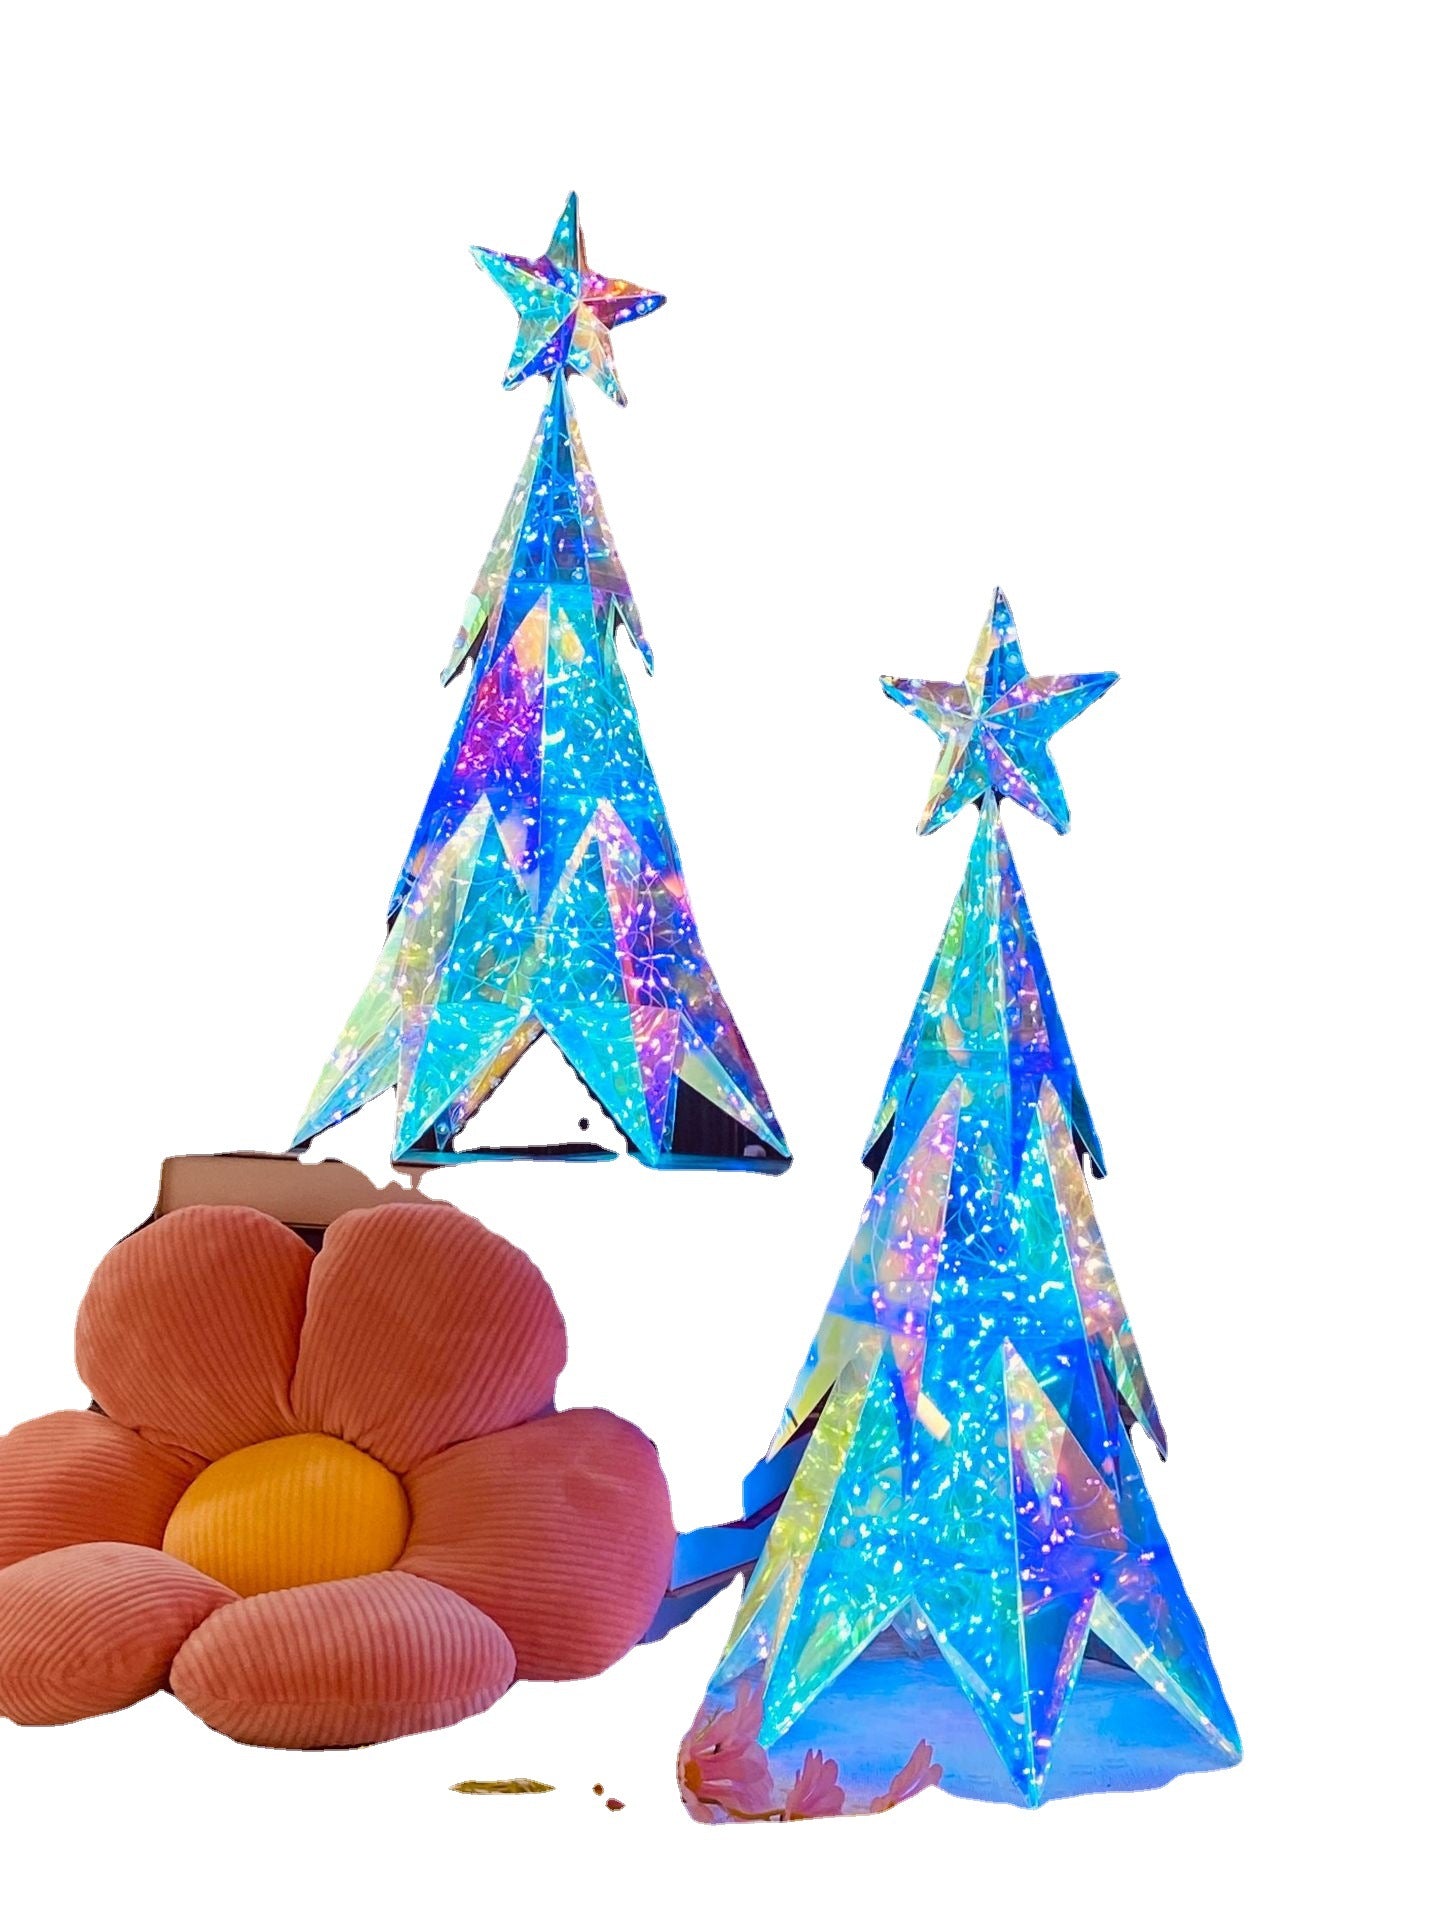 Illusory Glow Christmas Tree Decorations